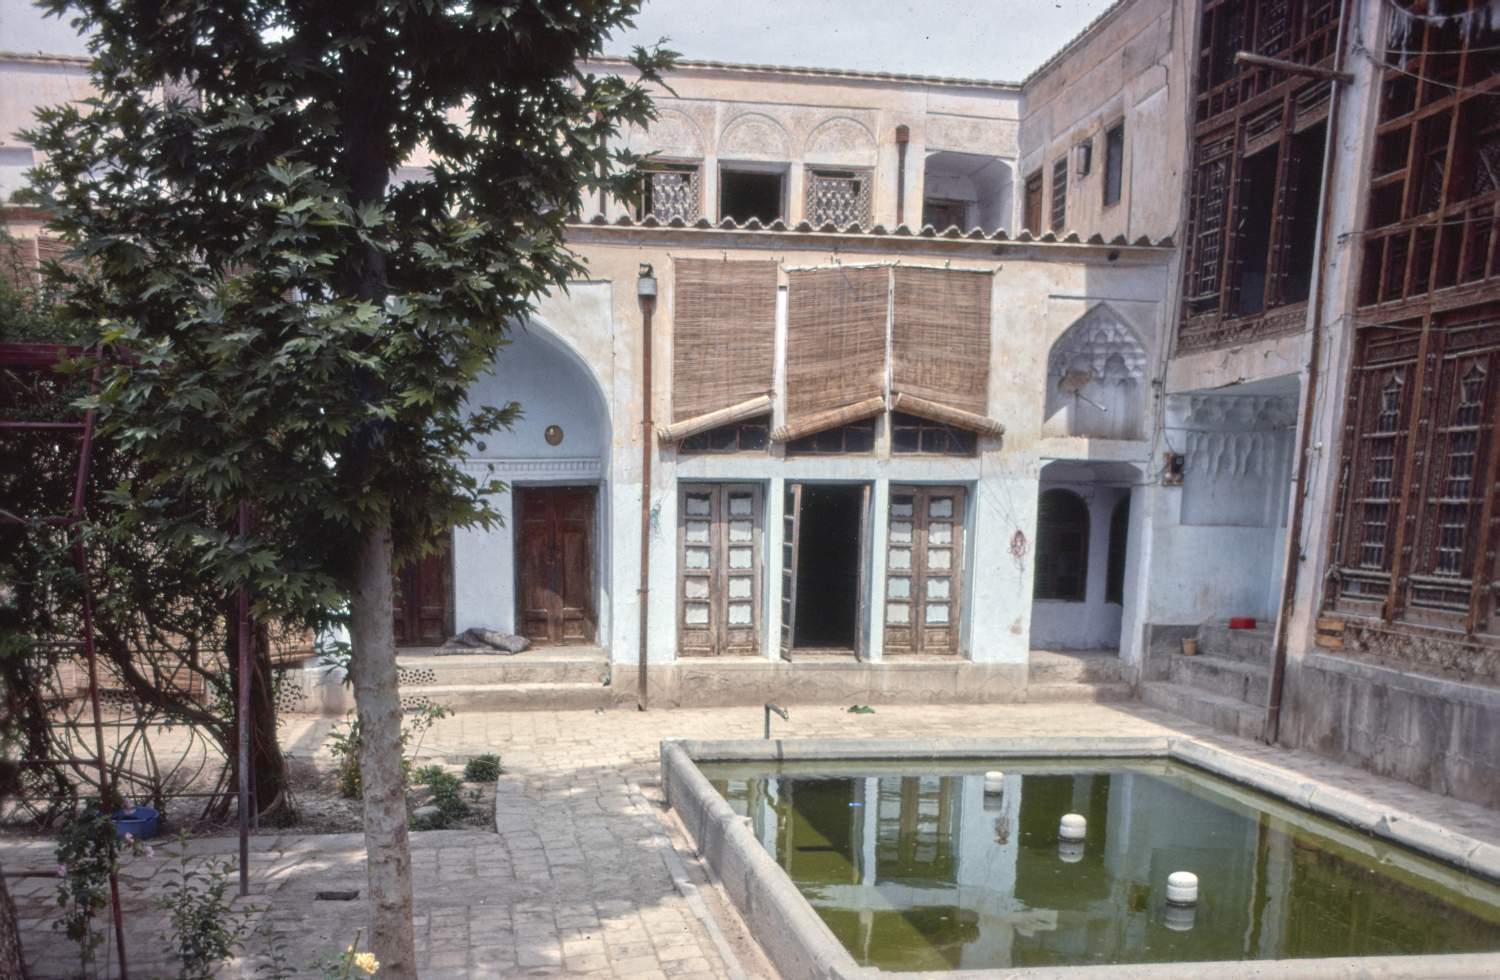 View of northwestern corner of courtyard from east side, showing rectangular pool below large windows.